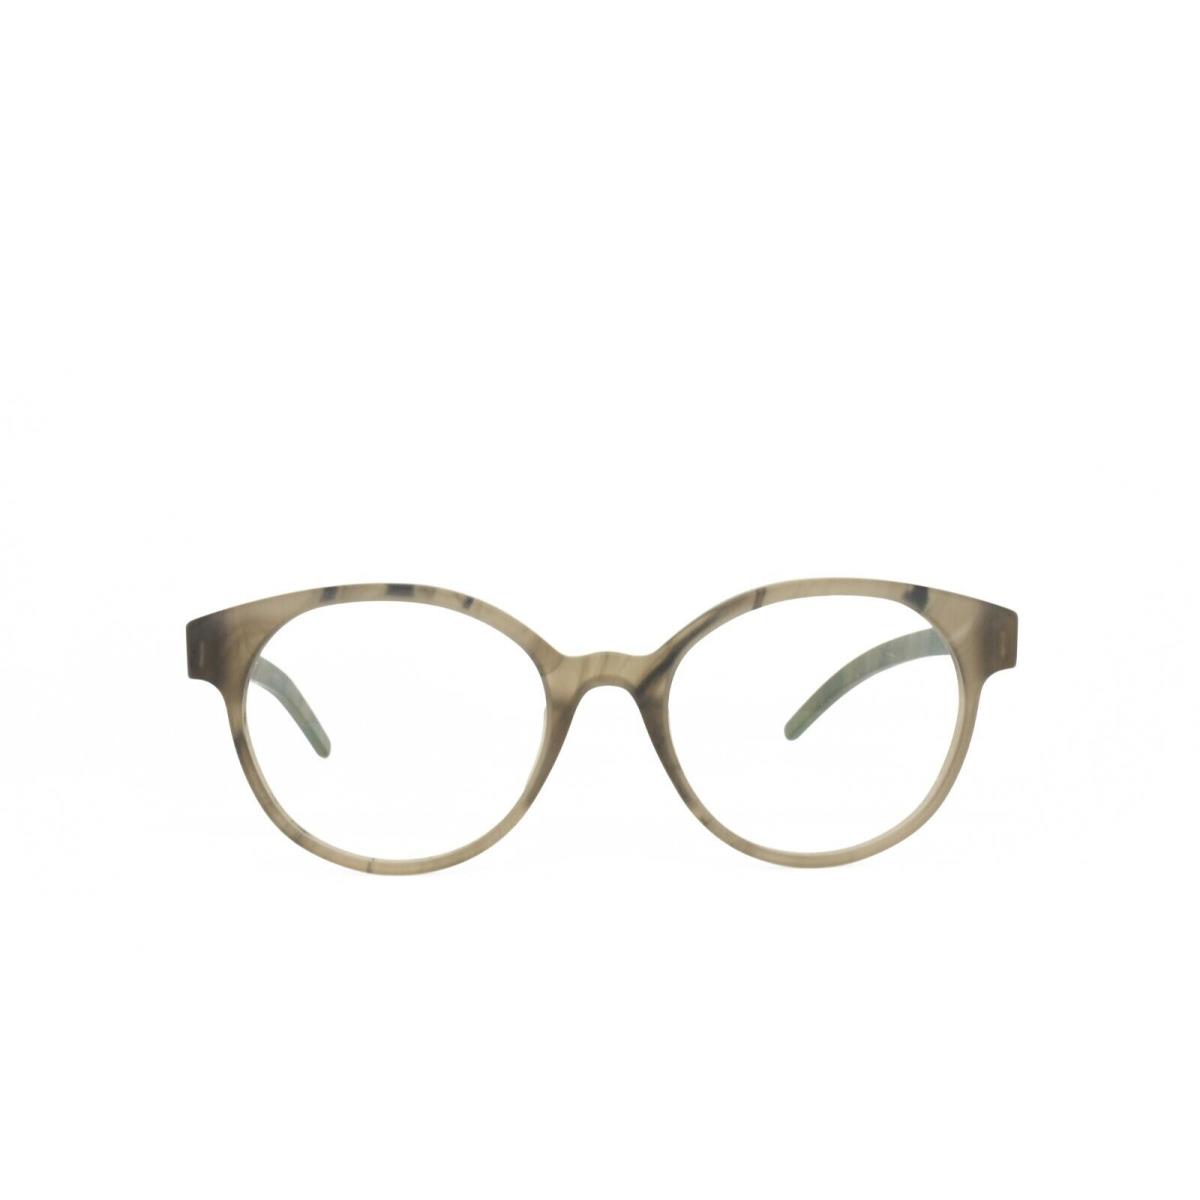 iC Berlin Eyeglasses Julia S. Bronze Driftwood Matte 51-20-145 - Frame: Light Brown Tortoise